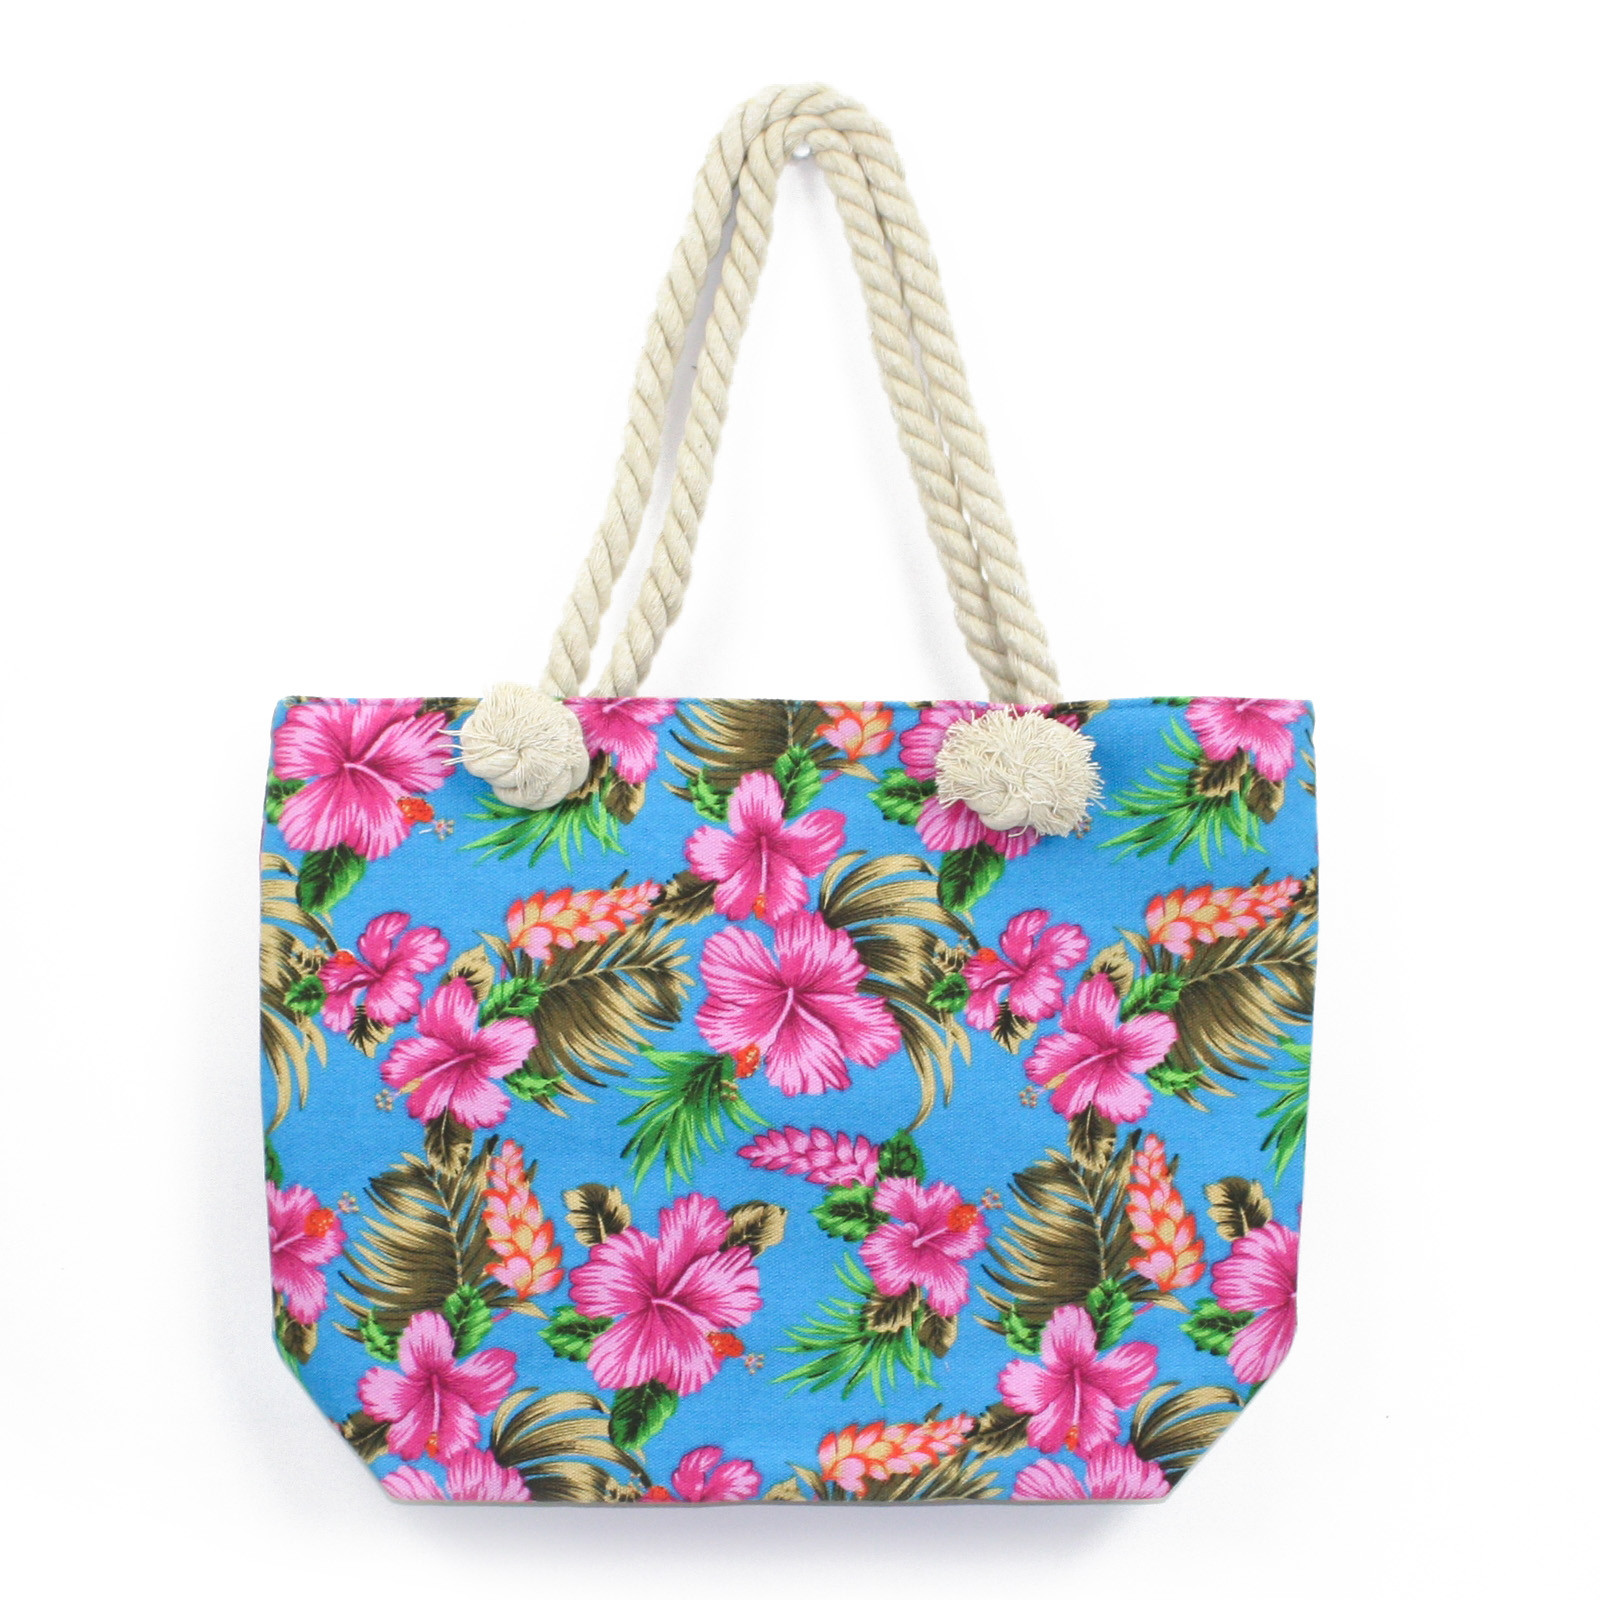 Hawaiian Rope Bag Turquoise - Beach Bags - Bags